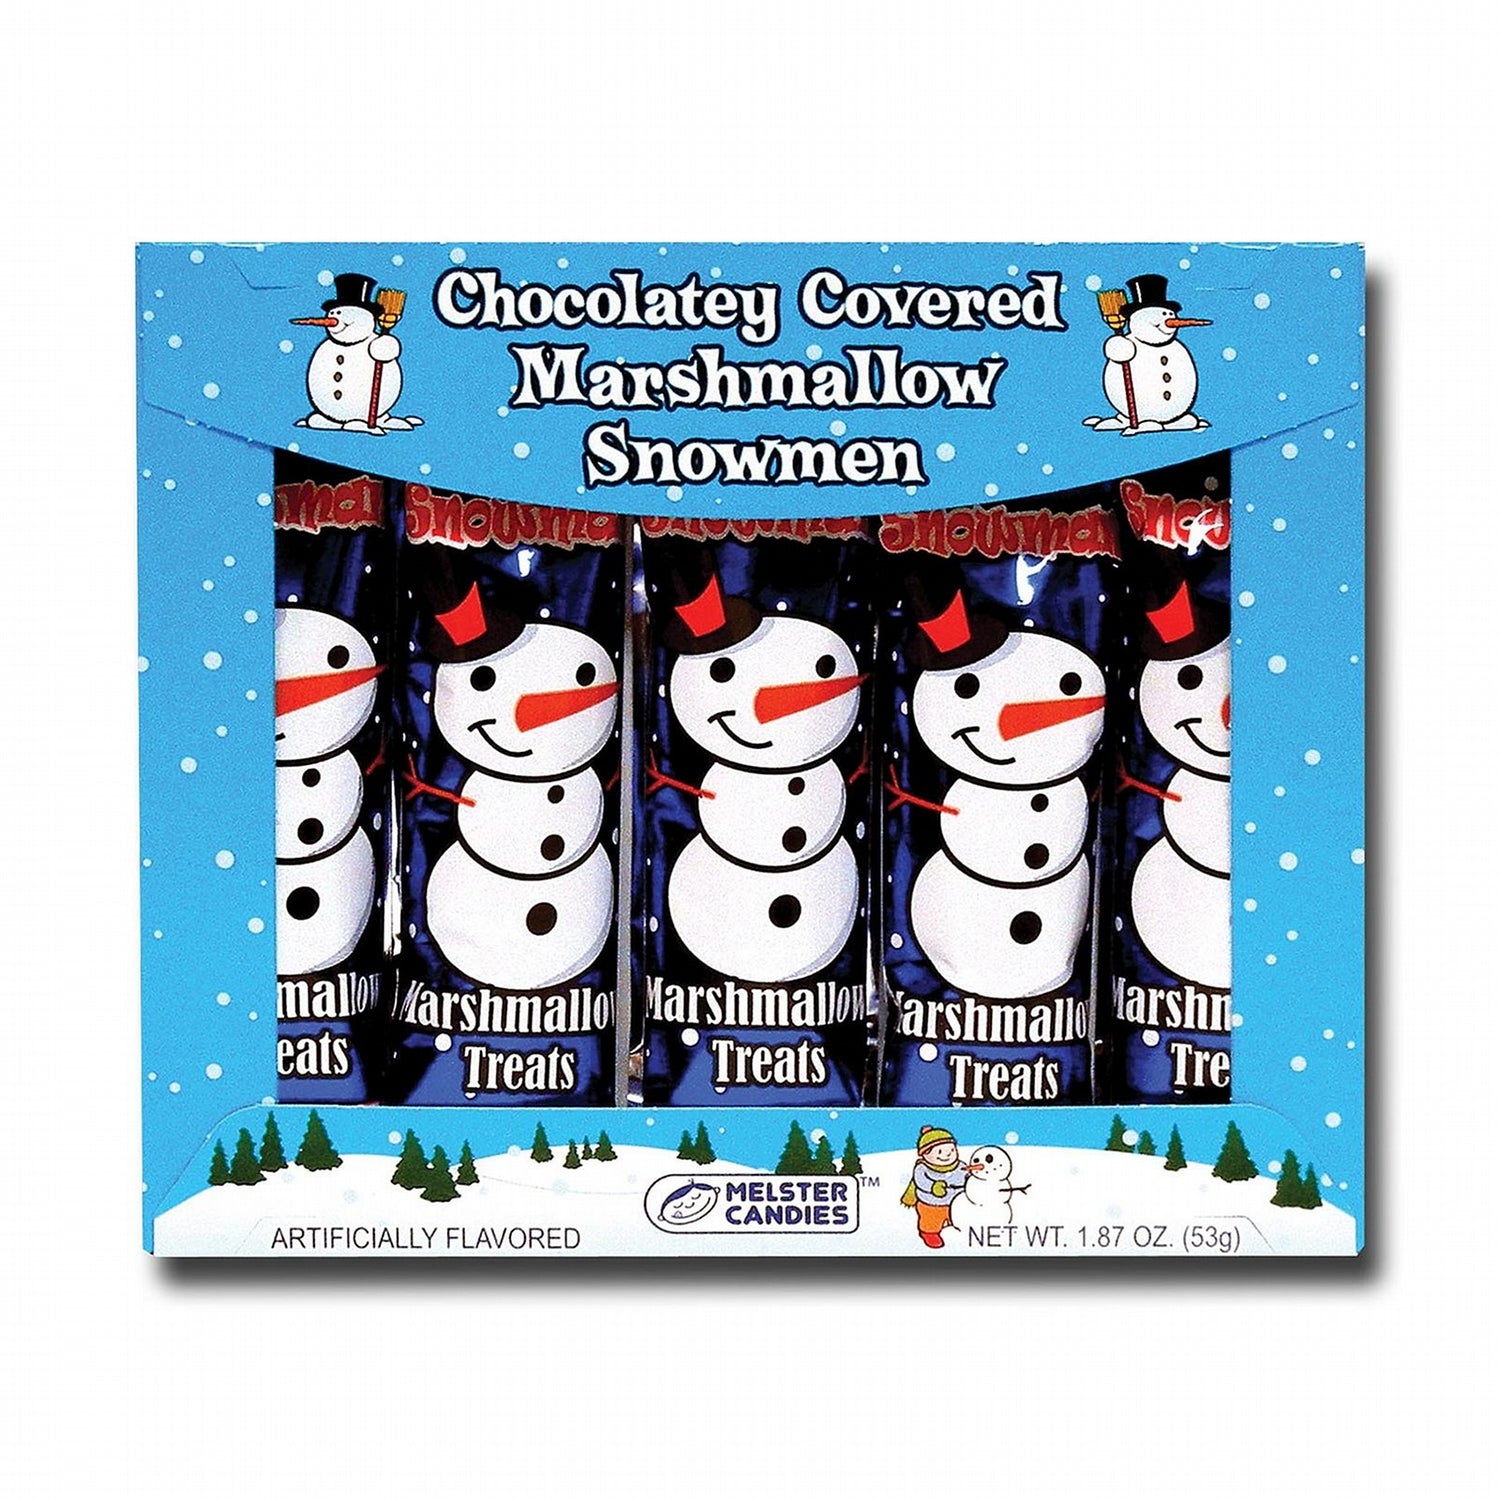 Melster Chocolatey Covered Marshmallow Snowmen, 1.87oz